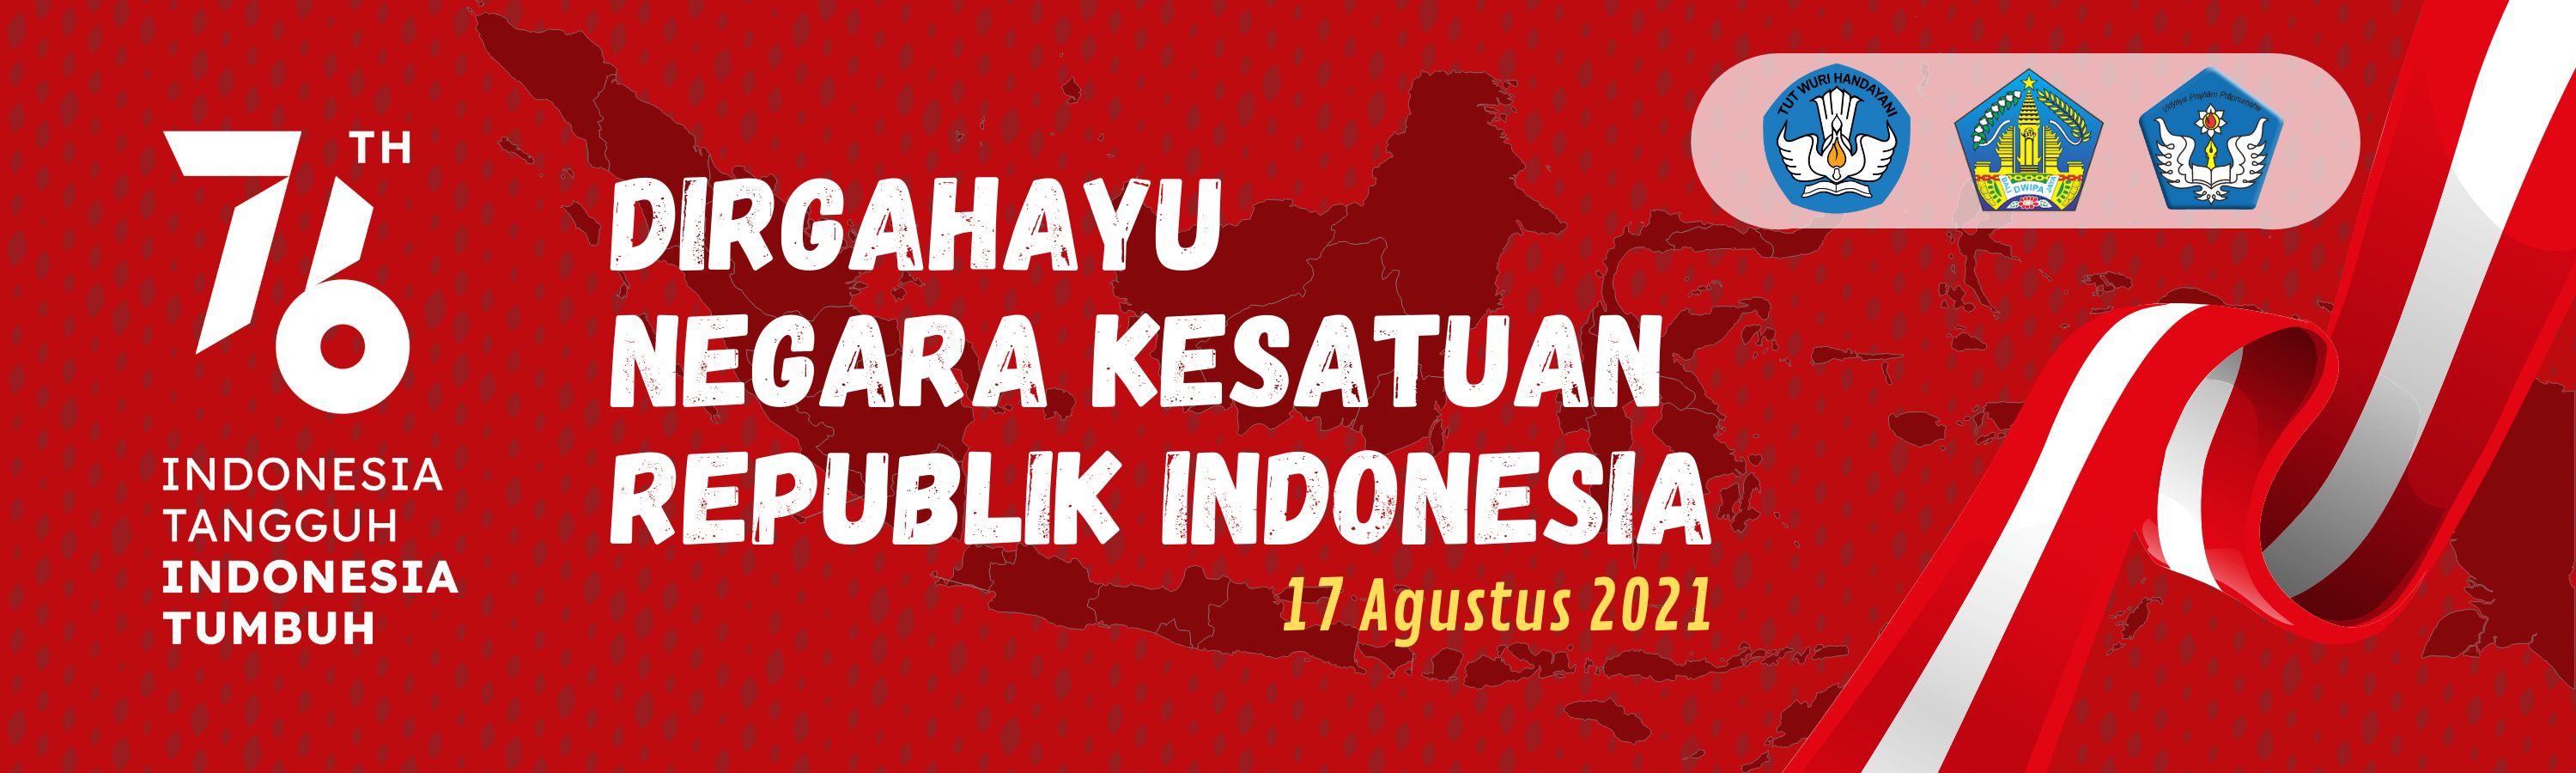 Dirgahayu Negara Kesatuan Republik Indonesia